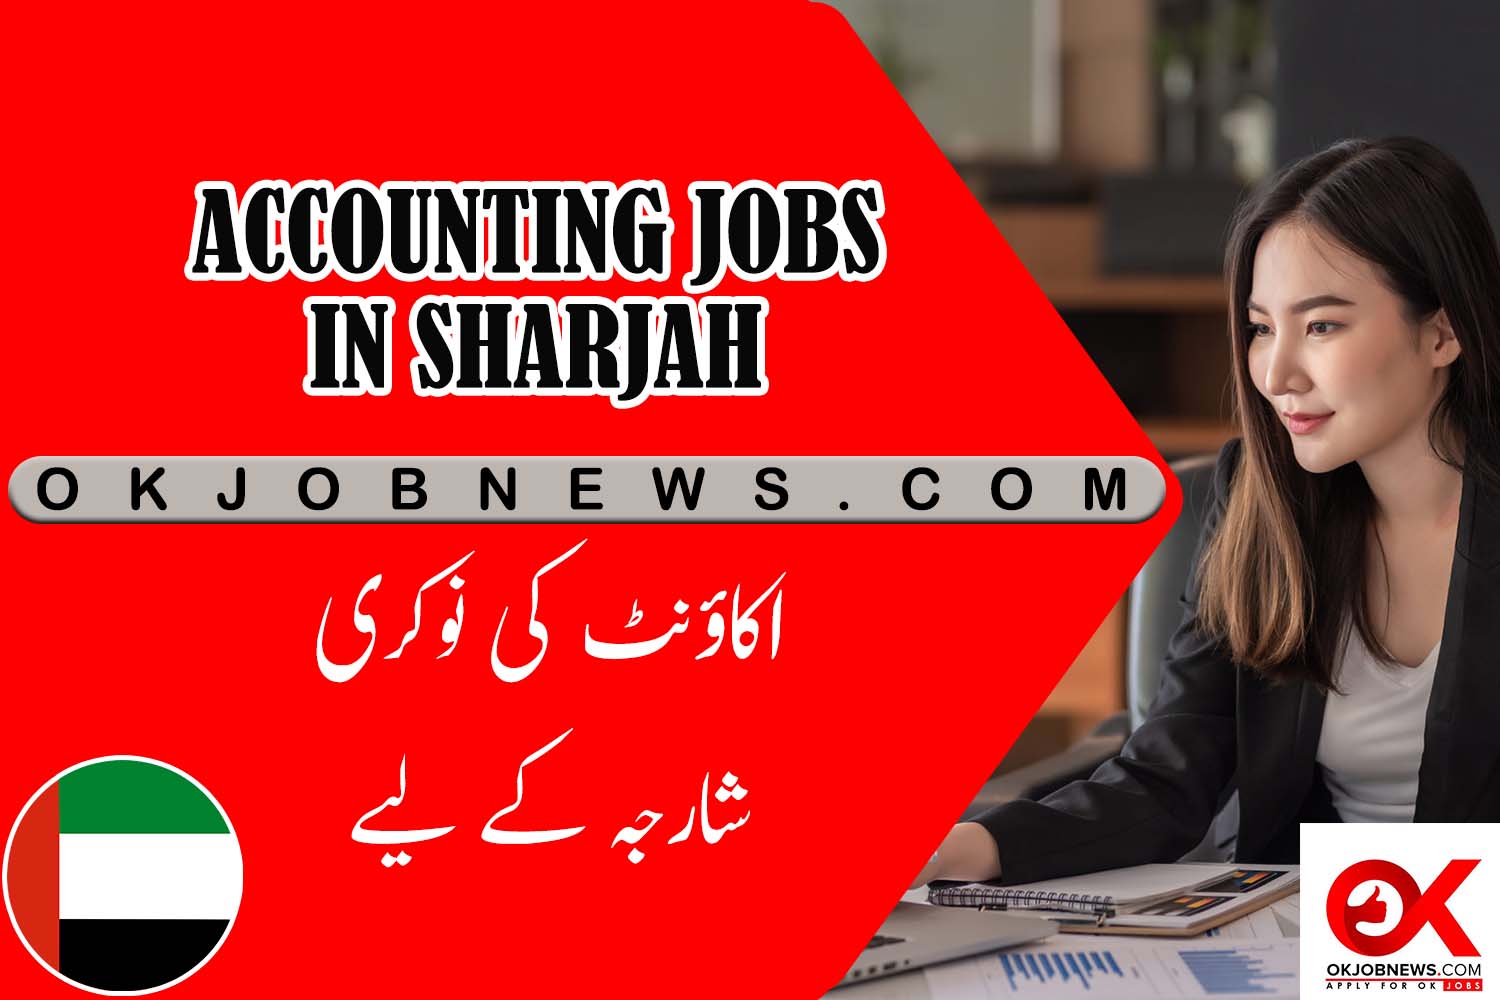 ACCOUNTING JOBS IN SHARJAH